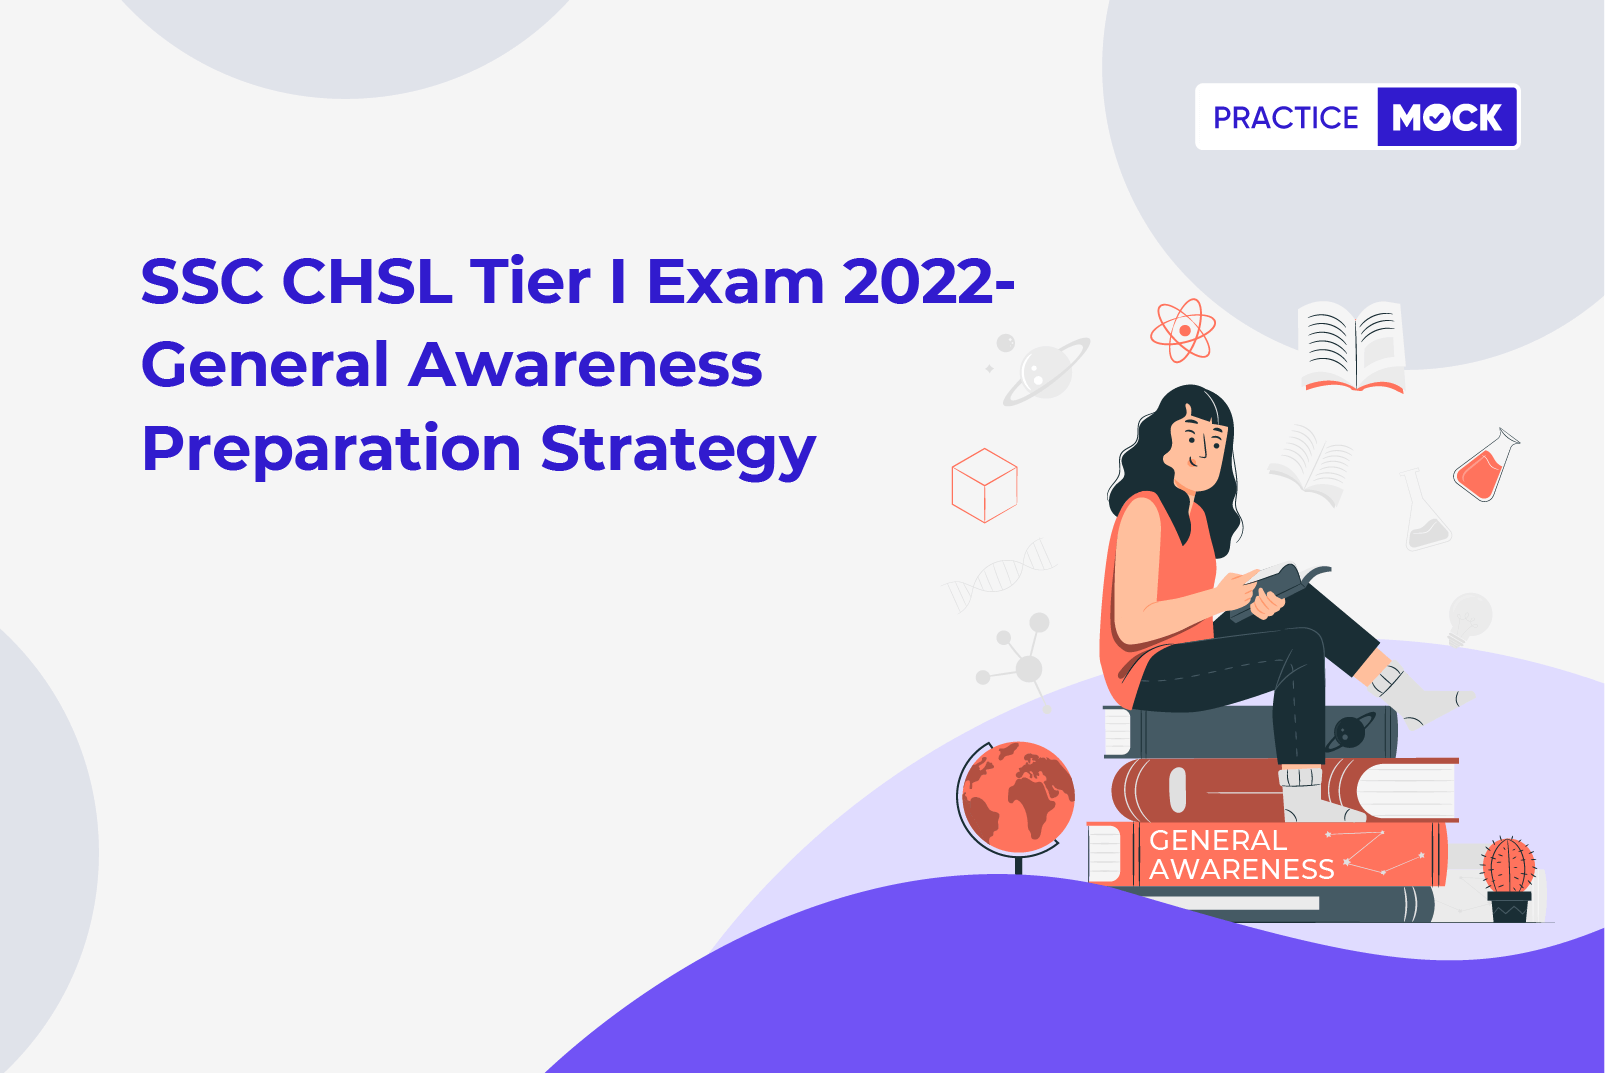 SSC CHSL Tier I Exam 2022-General Awareness Preparation Strategy